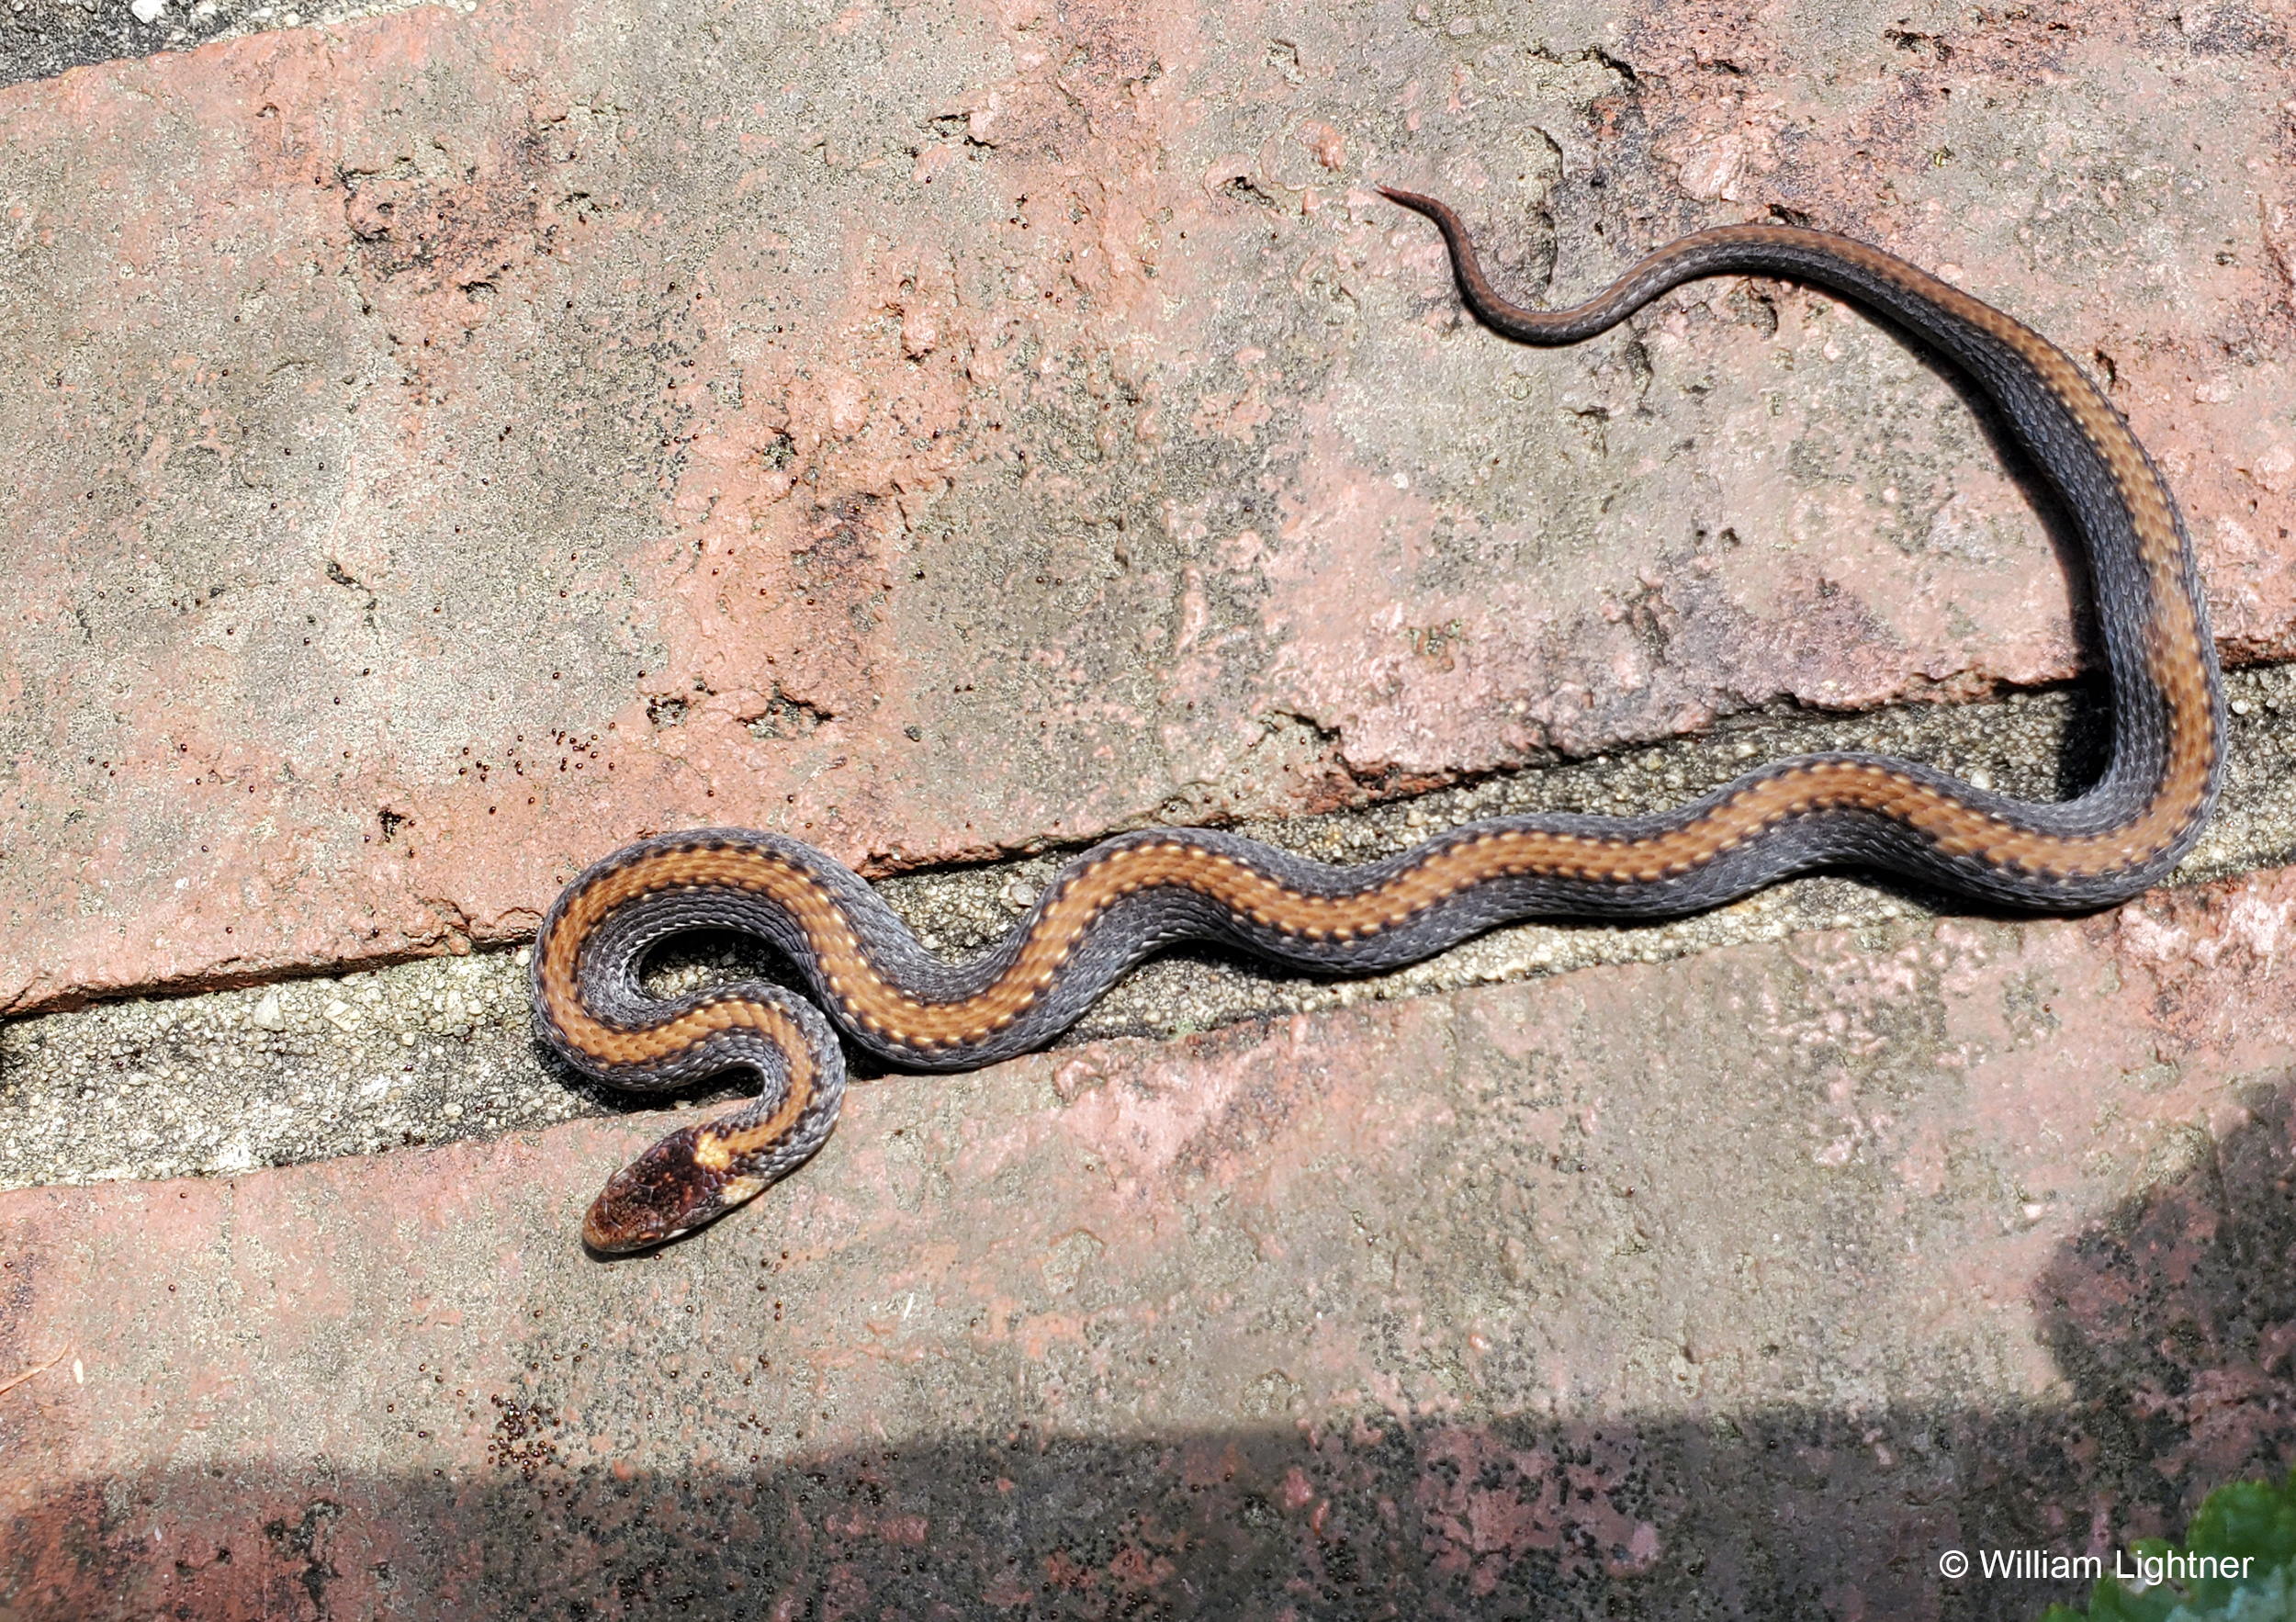 https://www.virginiaherpetologicalsociety.com/reptiles/snakes/northern-red-bellied-snake/red-bellied_snake_prince_william_co_william_lightner.jpg